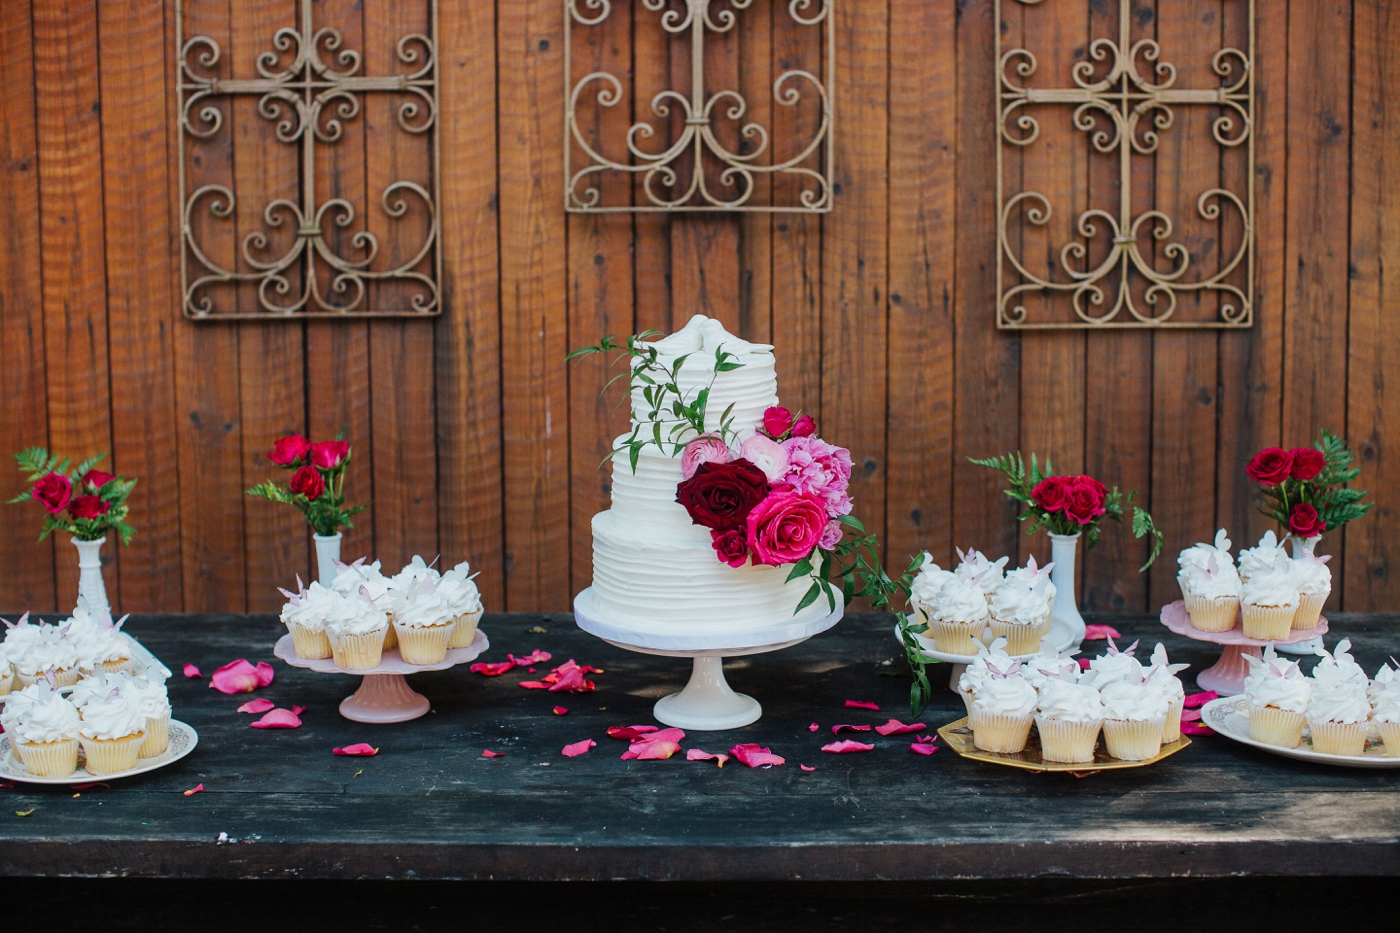 Dessert table - Simple wedding cake